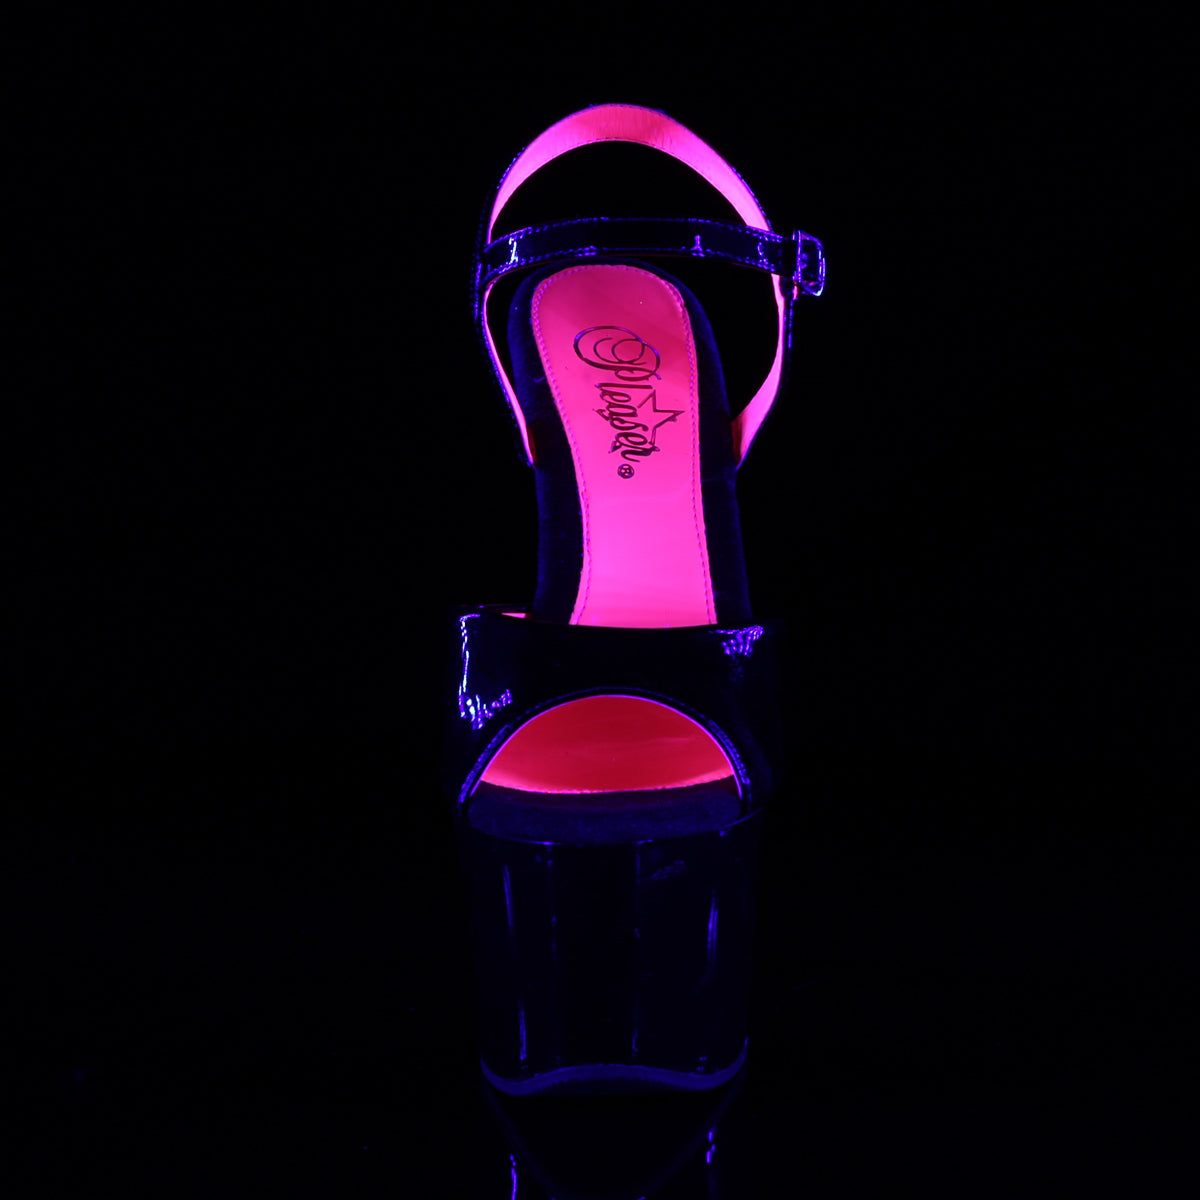 Pleaser Womens Sandals SKY-309TT Blk Pat/Blk-Neon H. Pink